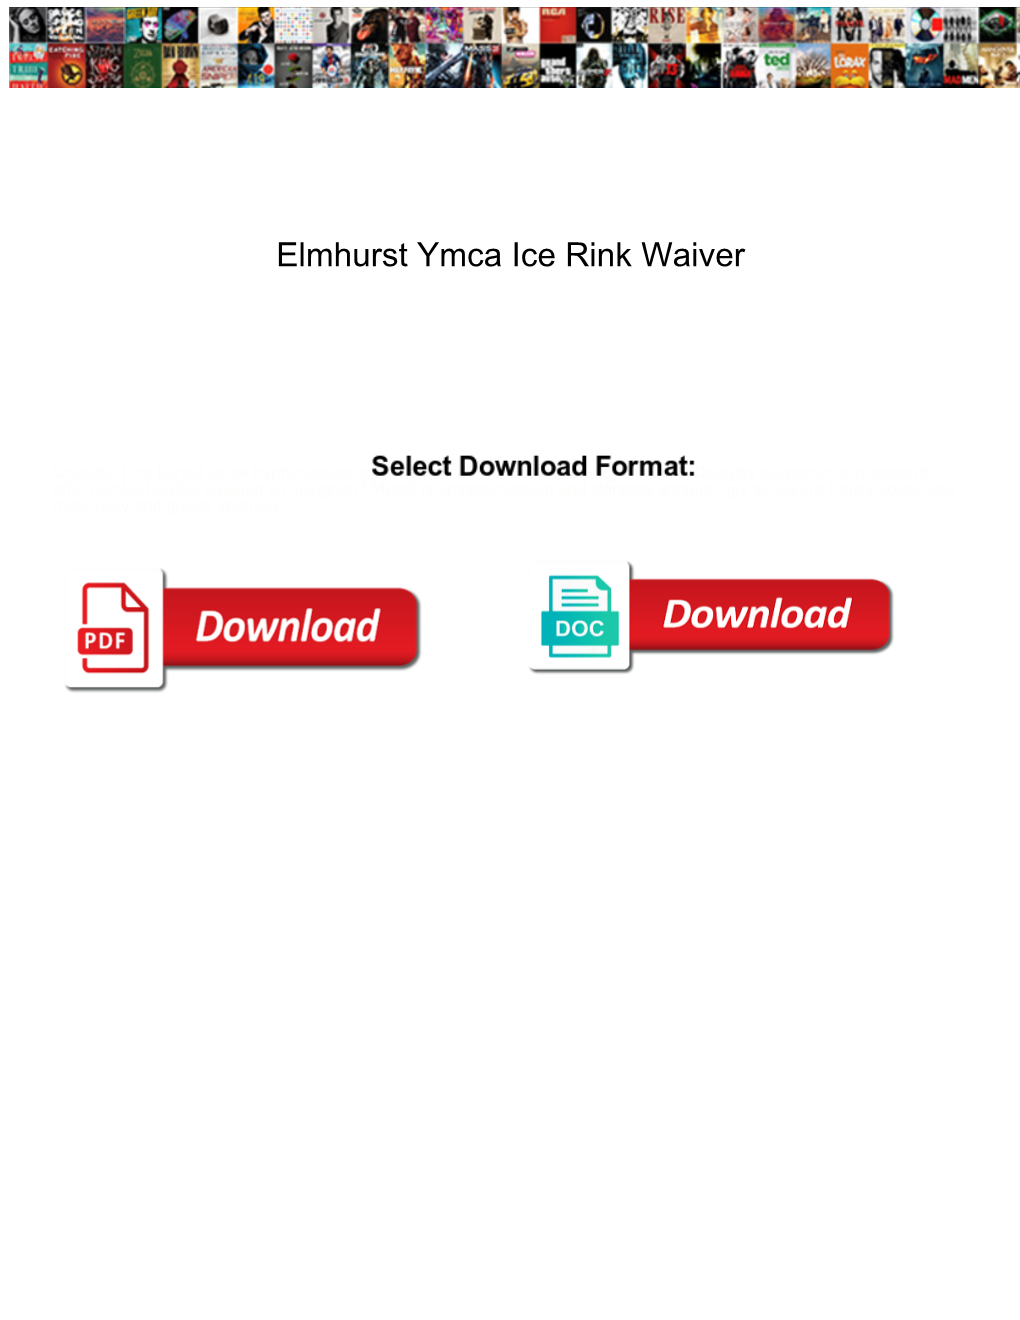 Elmhurst Ymca Ice Rink Waiver